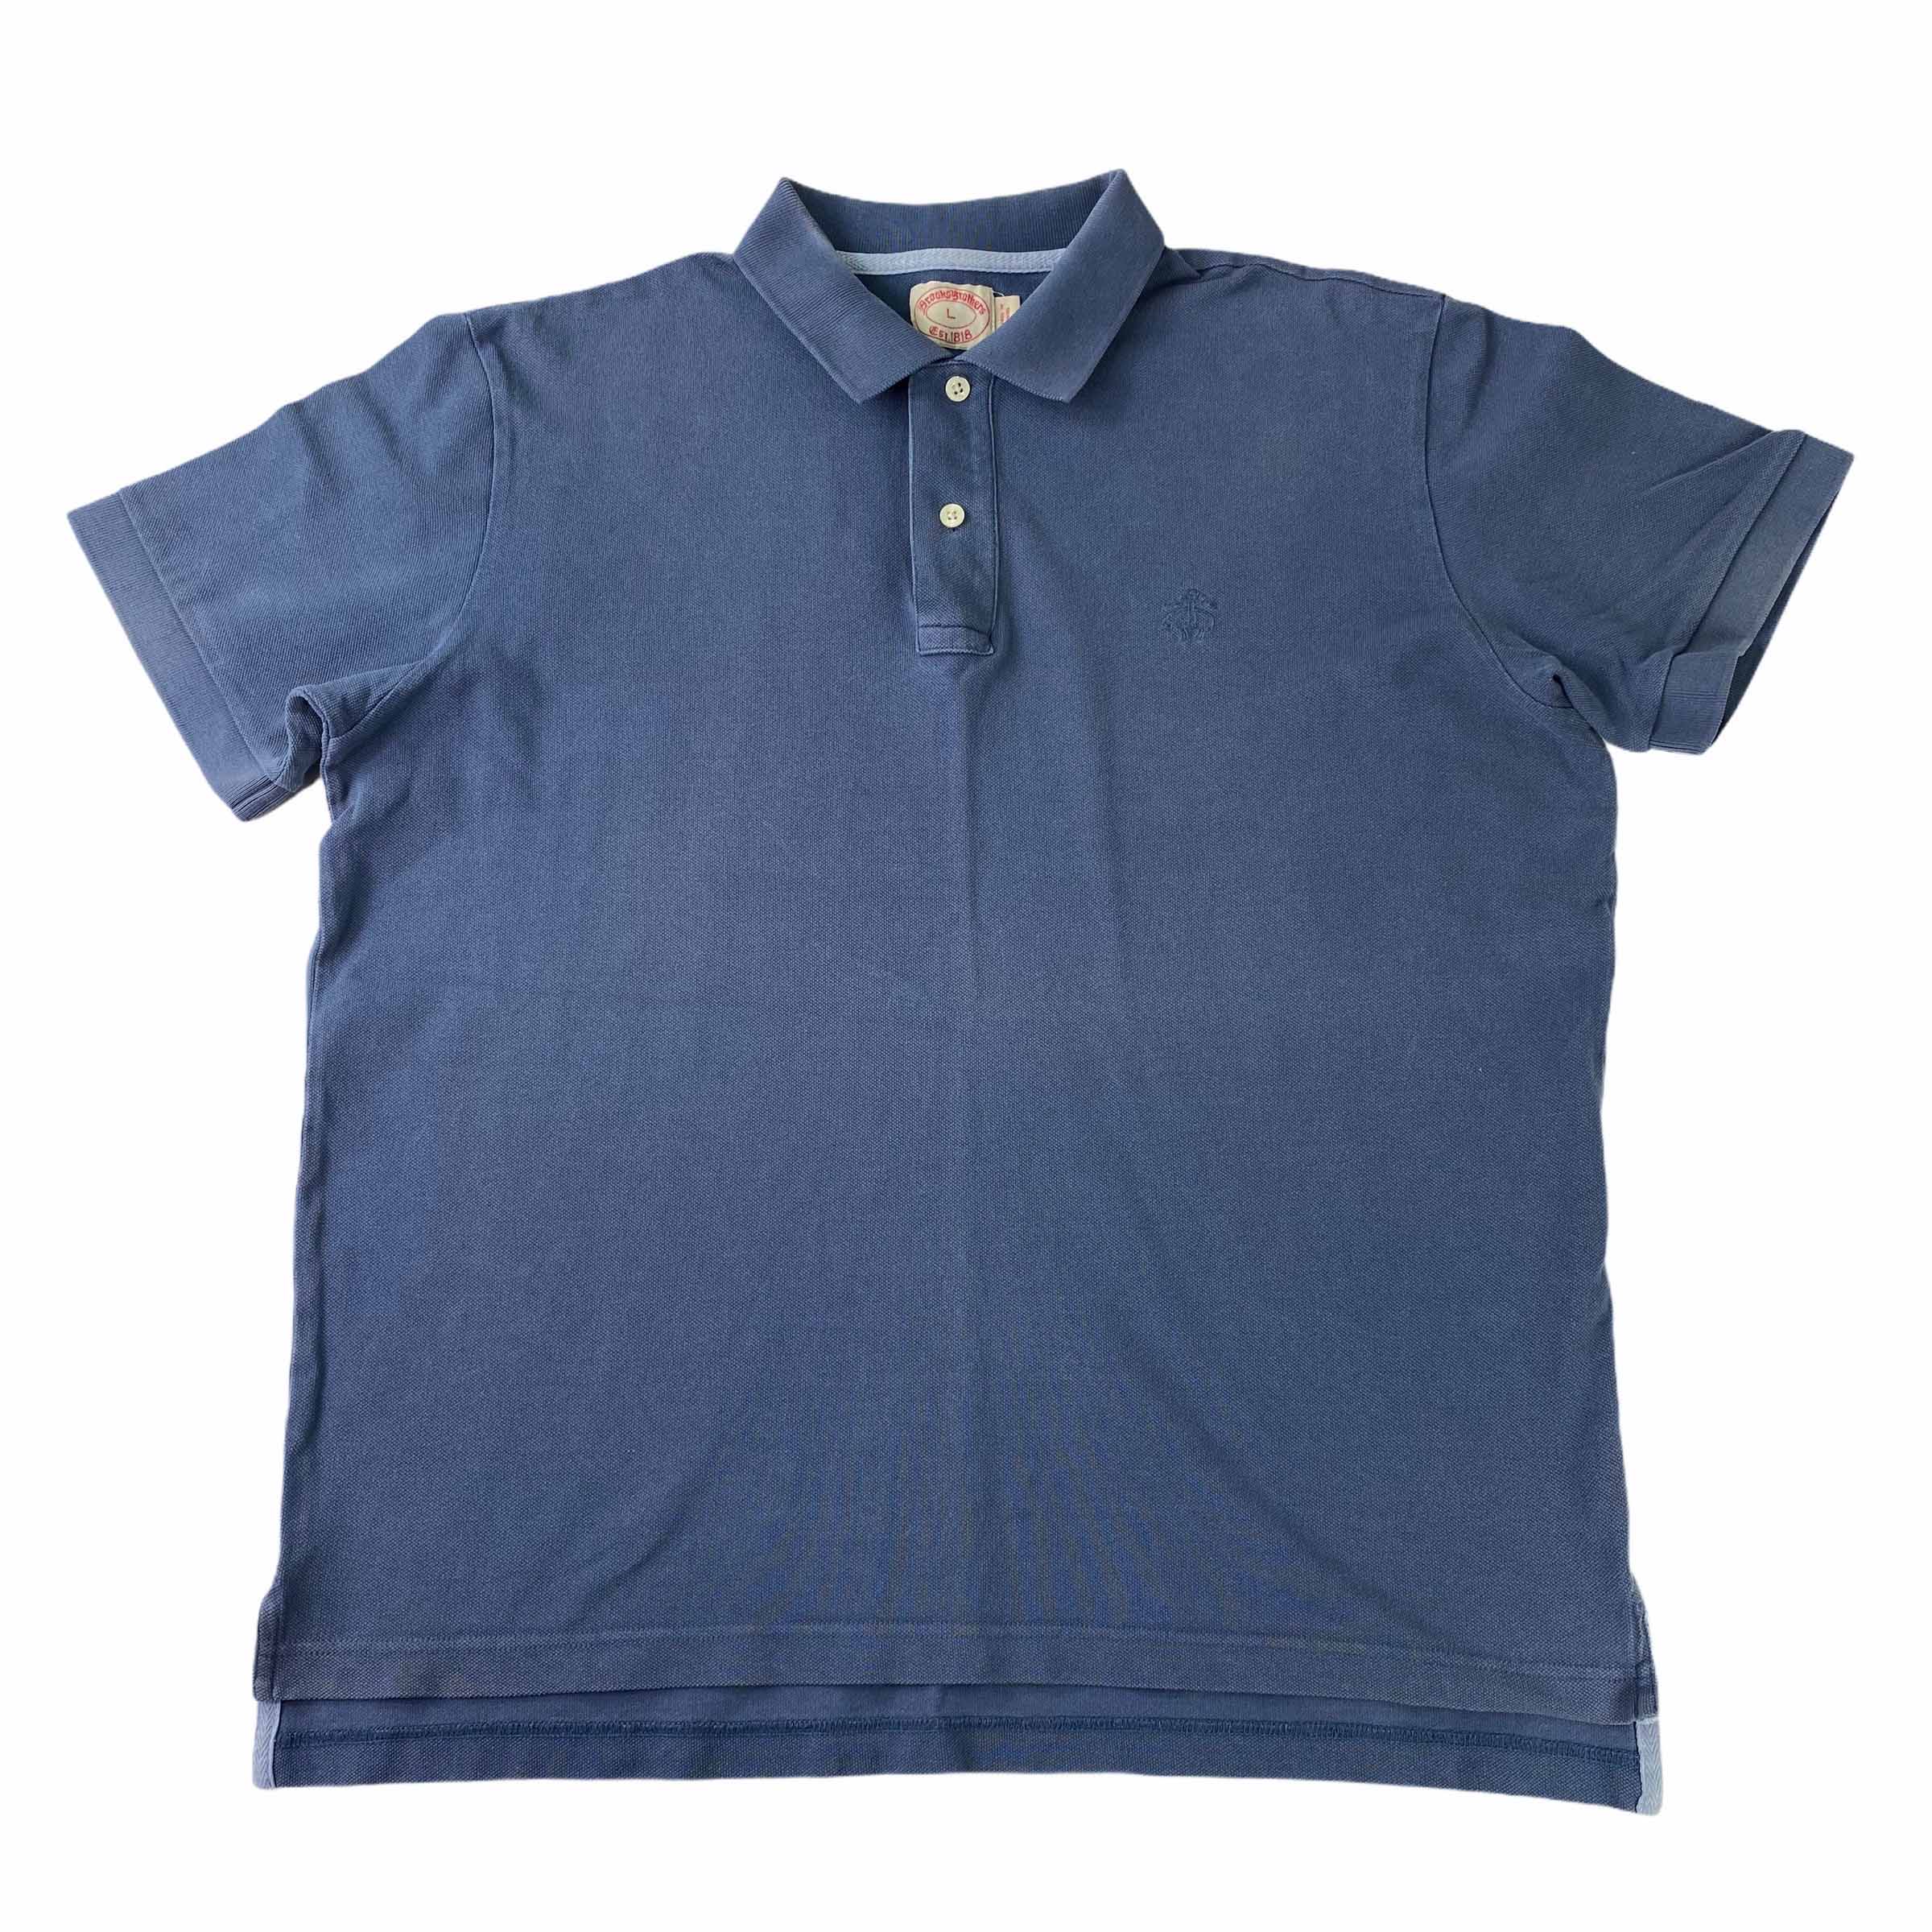 [Brooks Brothers] Blue Polo Shirt - Size L